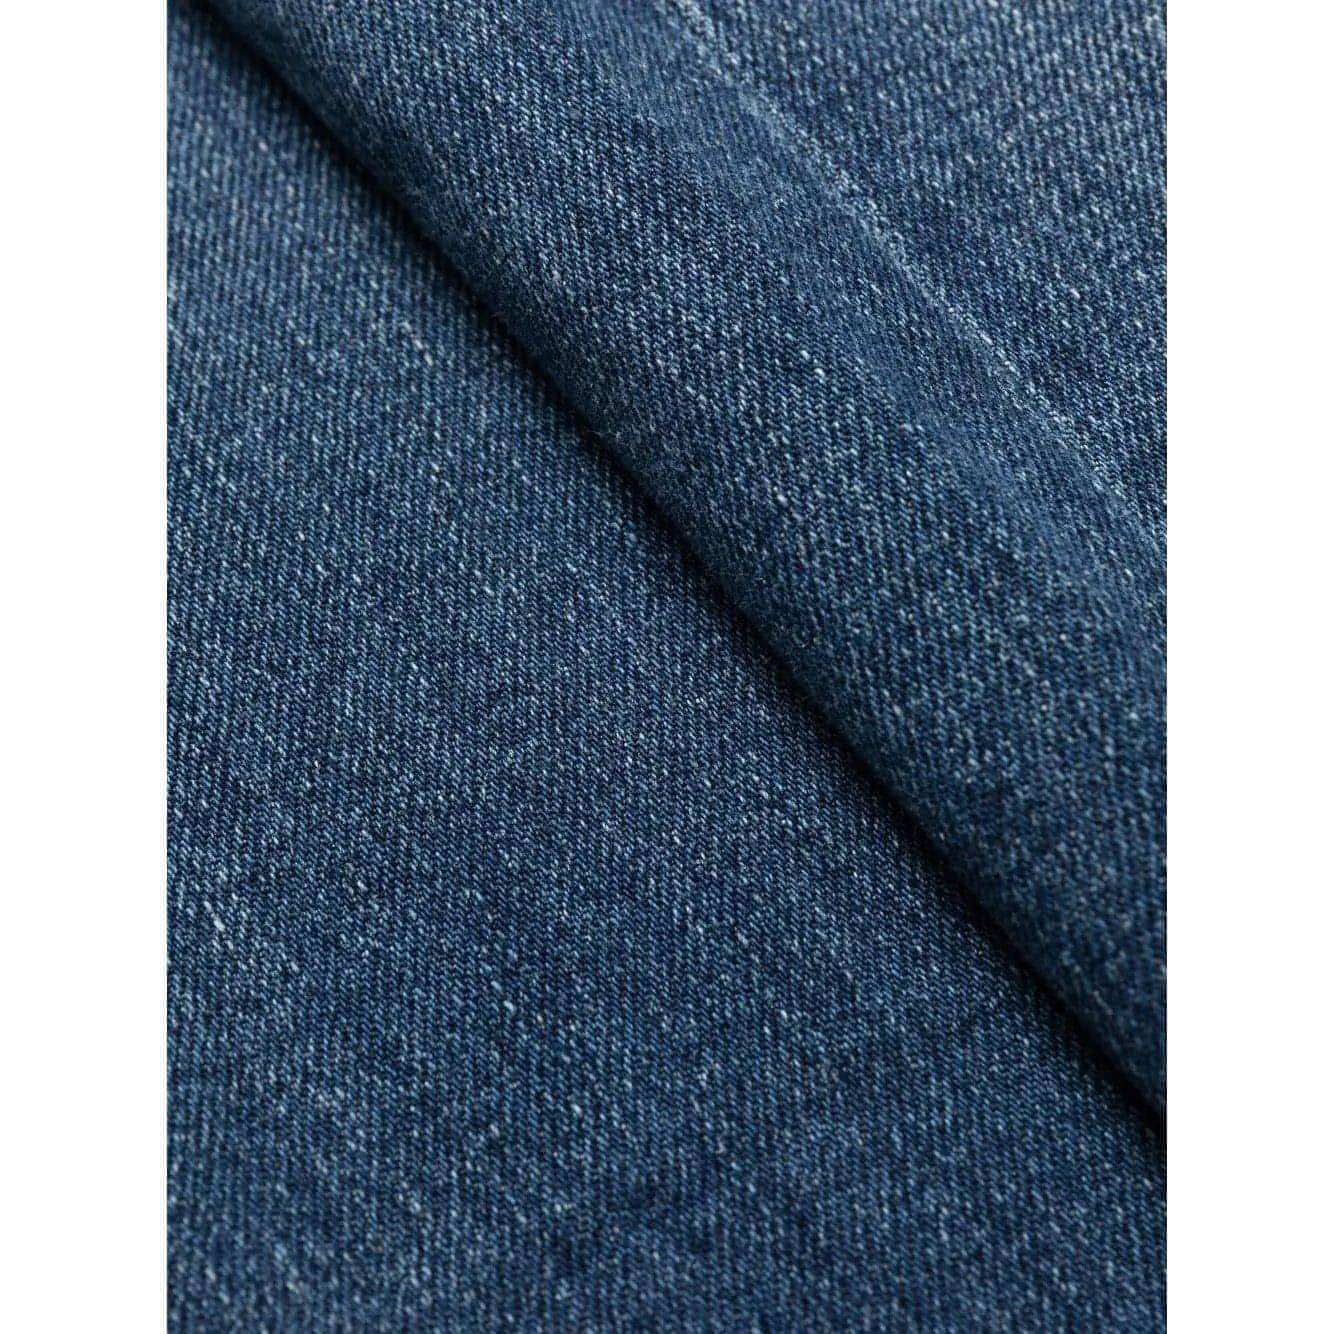 DIESEL moteriški mėlyni džinsai 1999 l.32 trousers